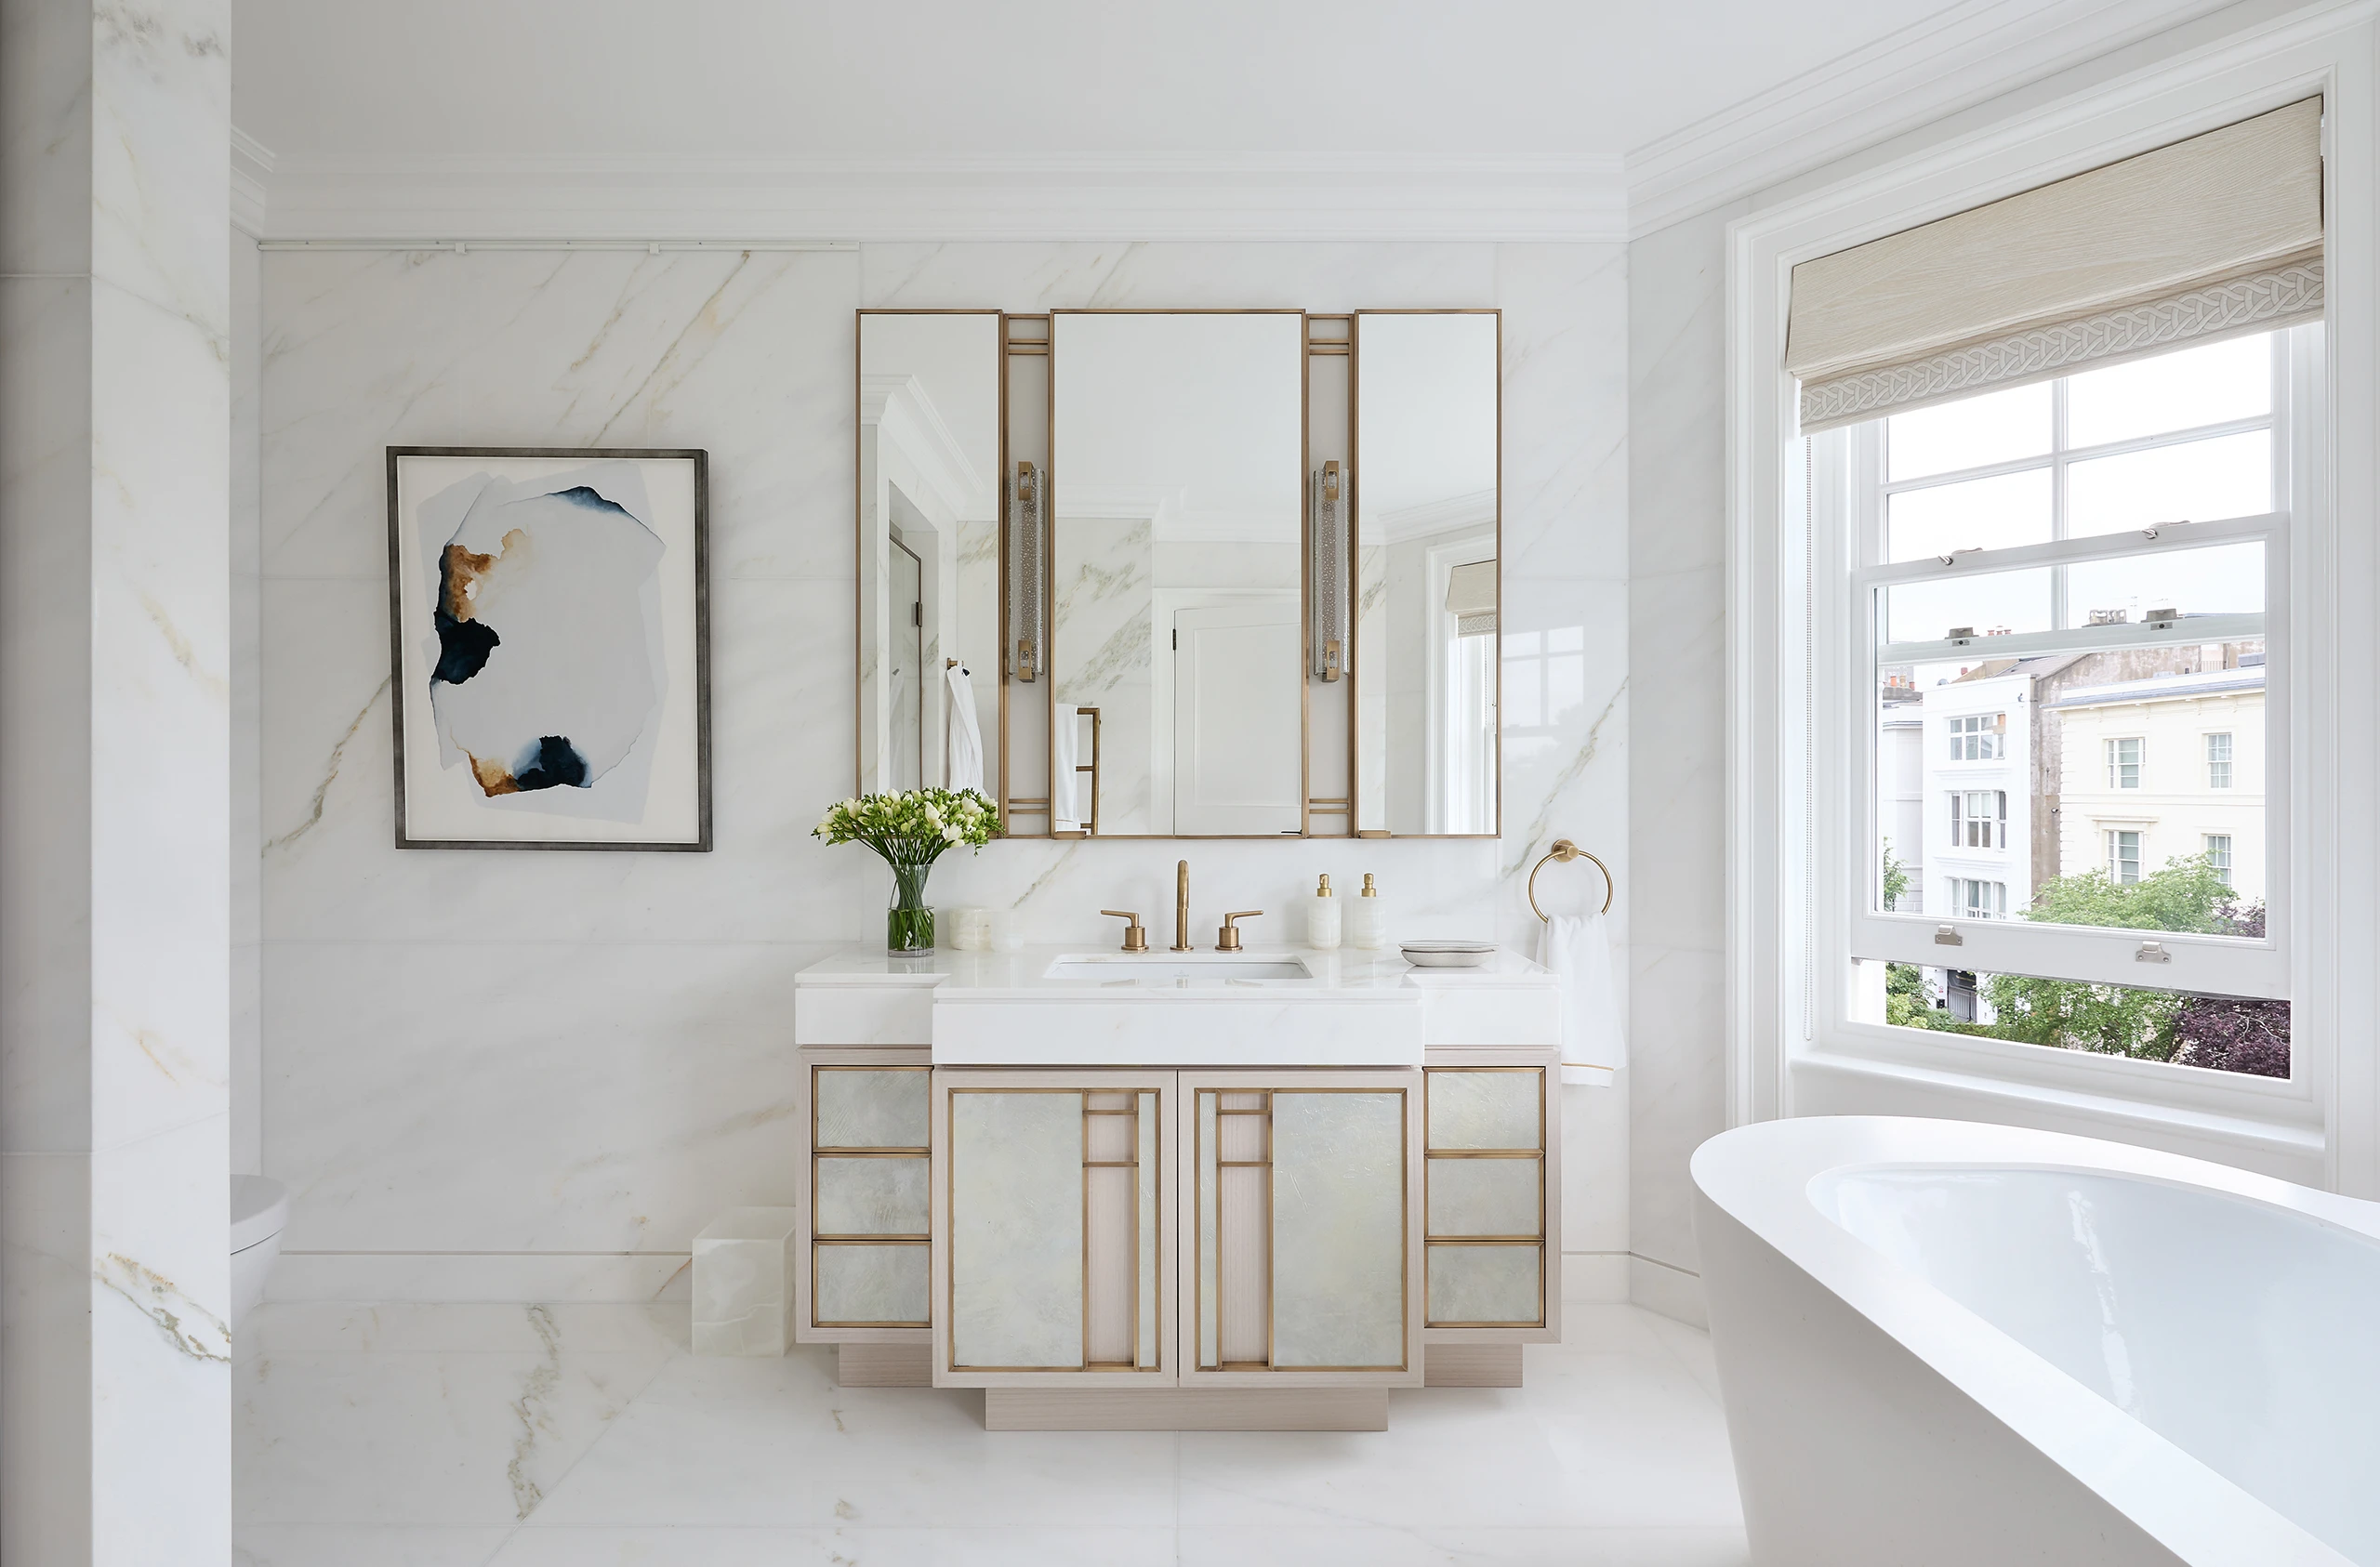 Katharine Pooley luxury interior design project london Notting Hill award winning interior design bathroom